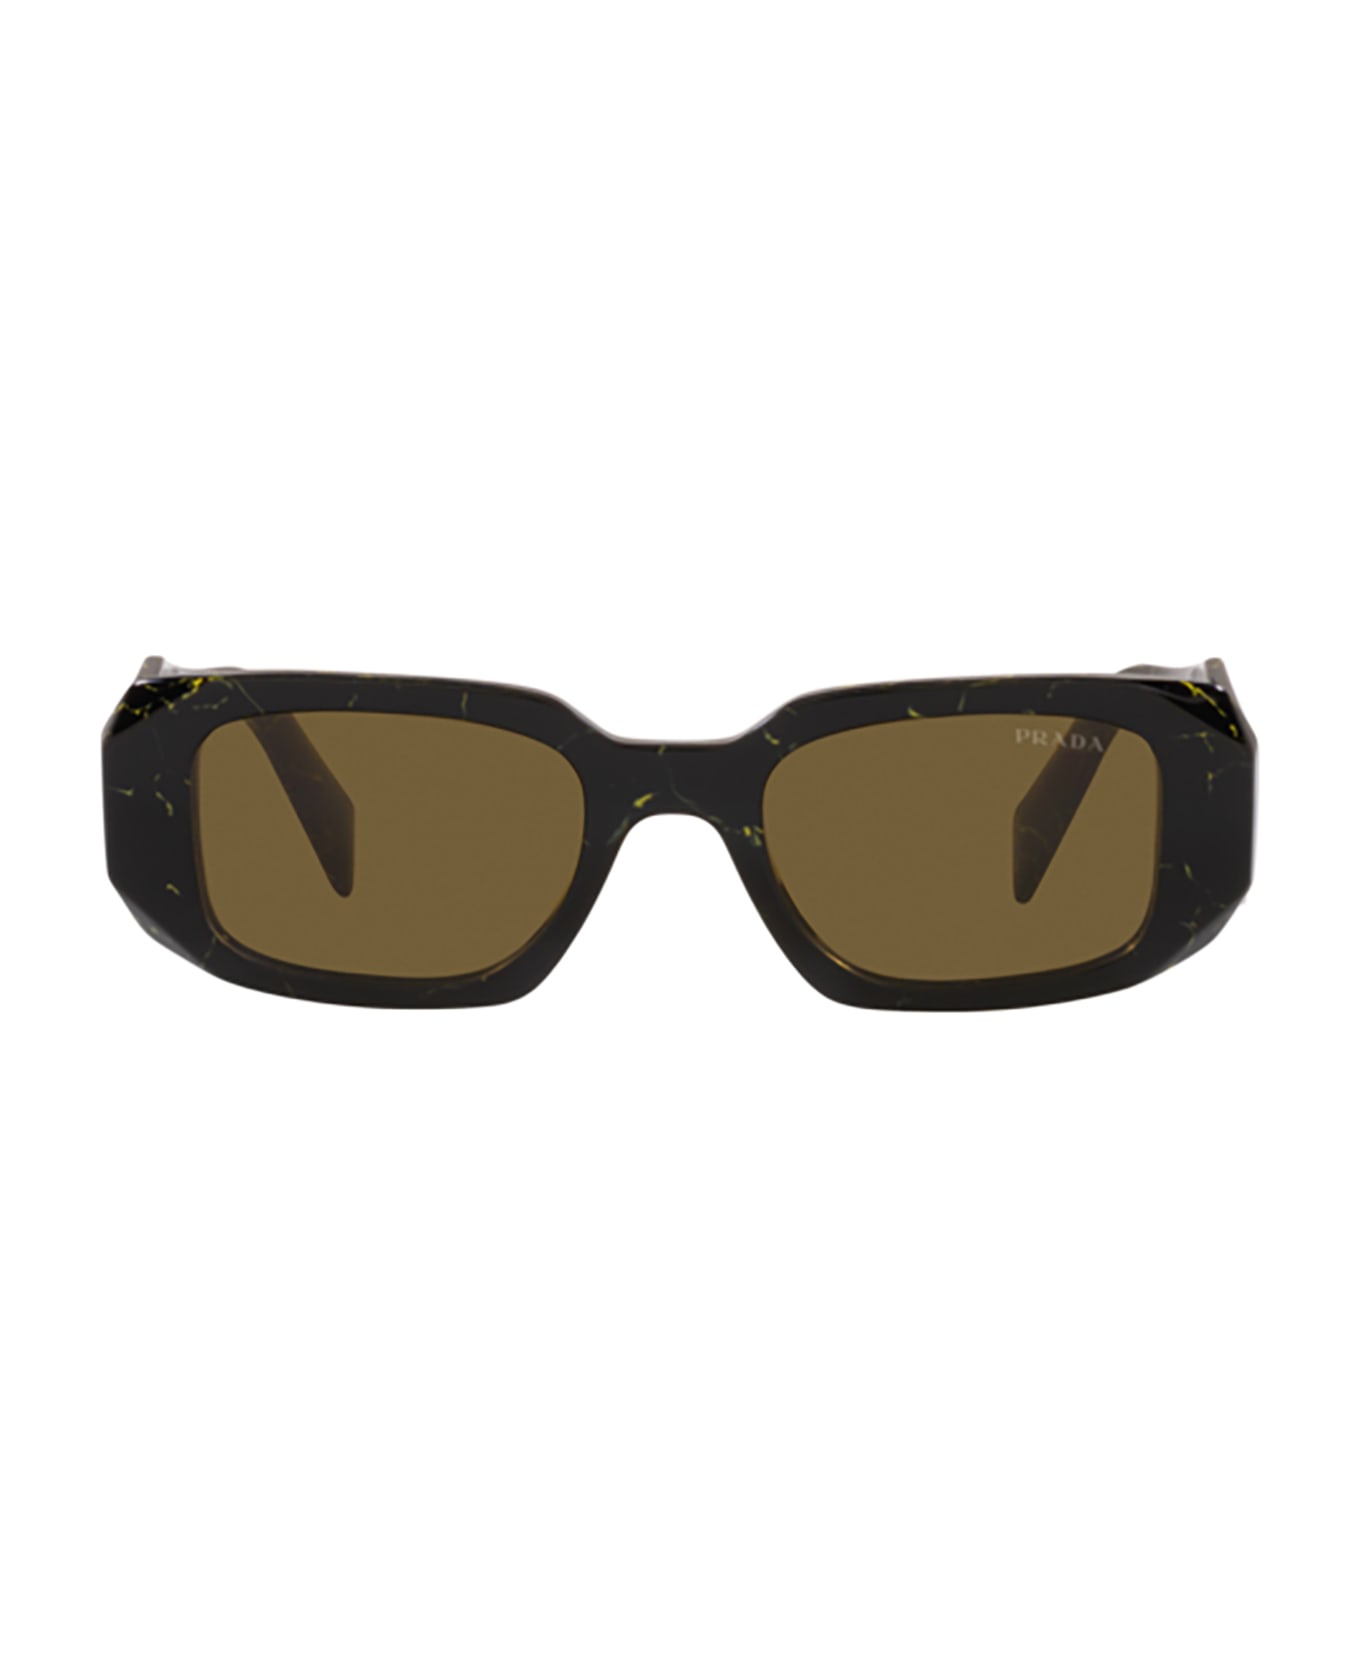 Prada Eyewear 17WS SOLE Sunglasses Maui - T